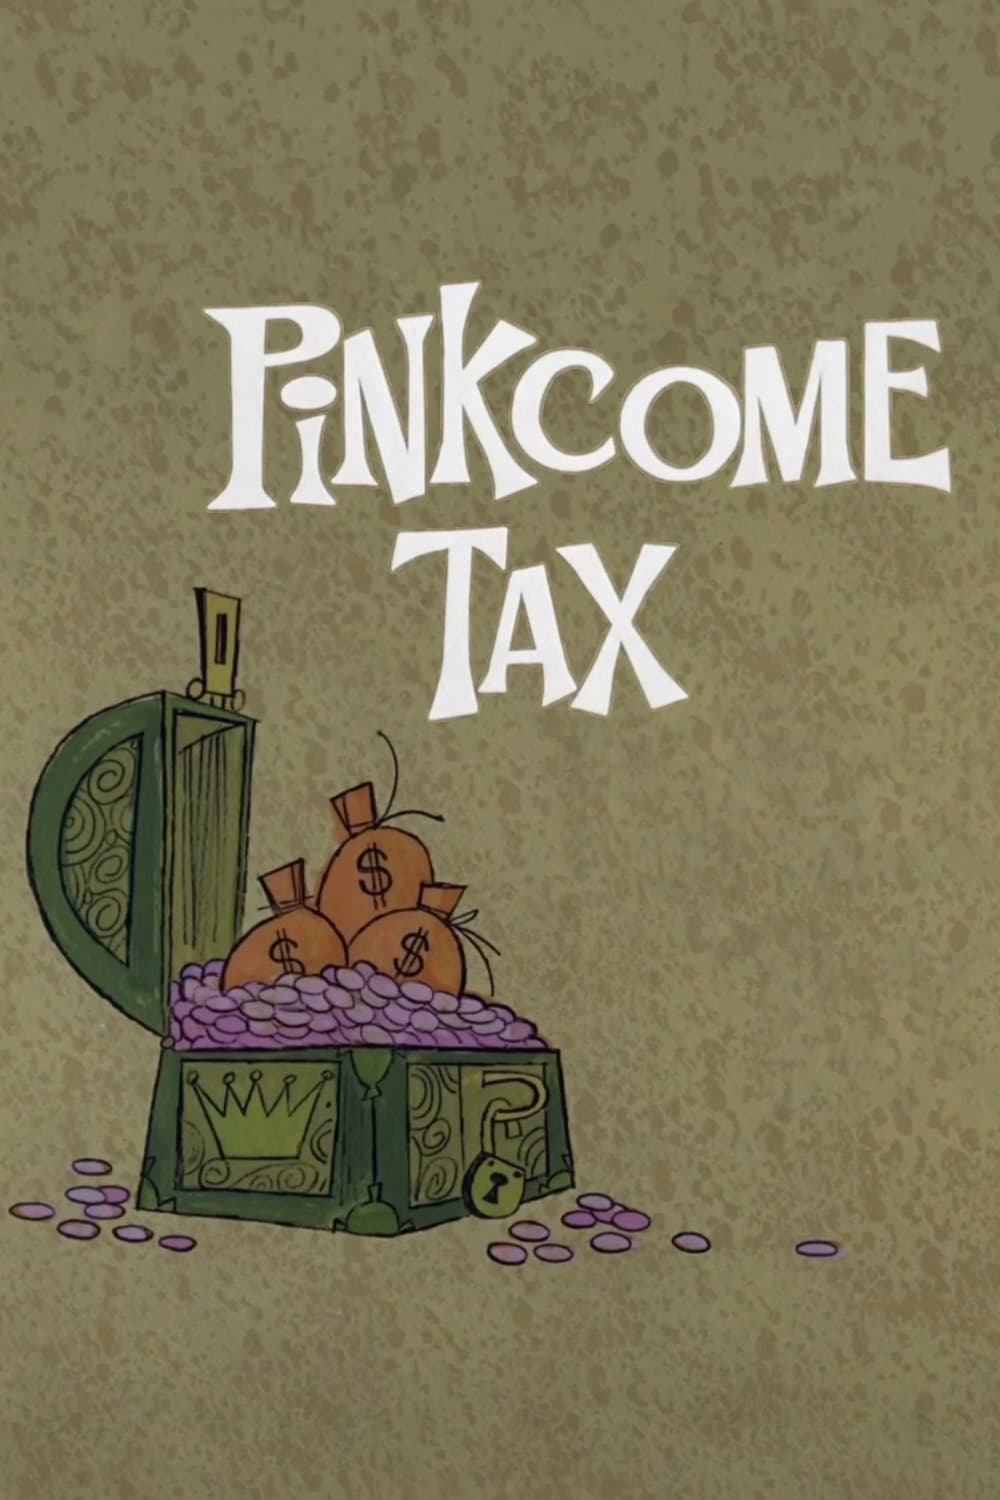 Pinkcome Tax (1968)